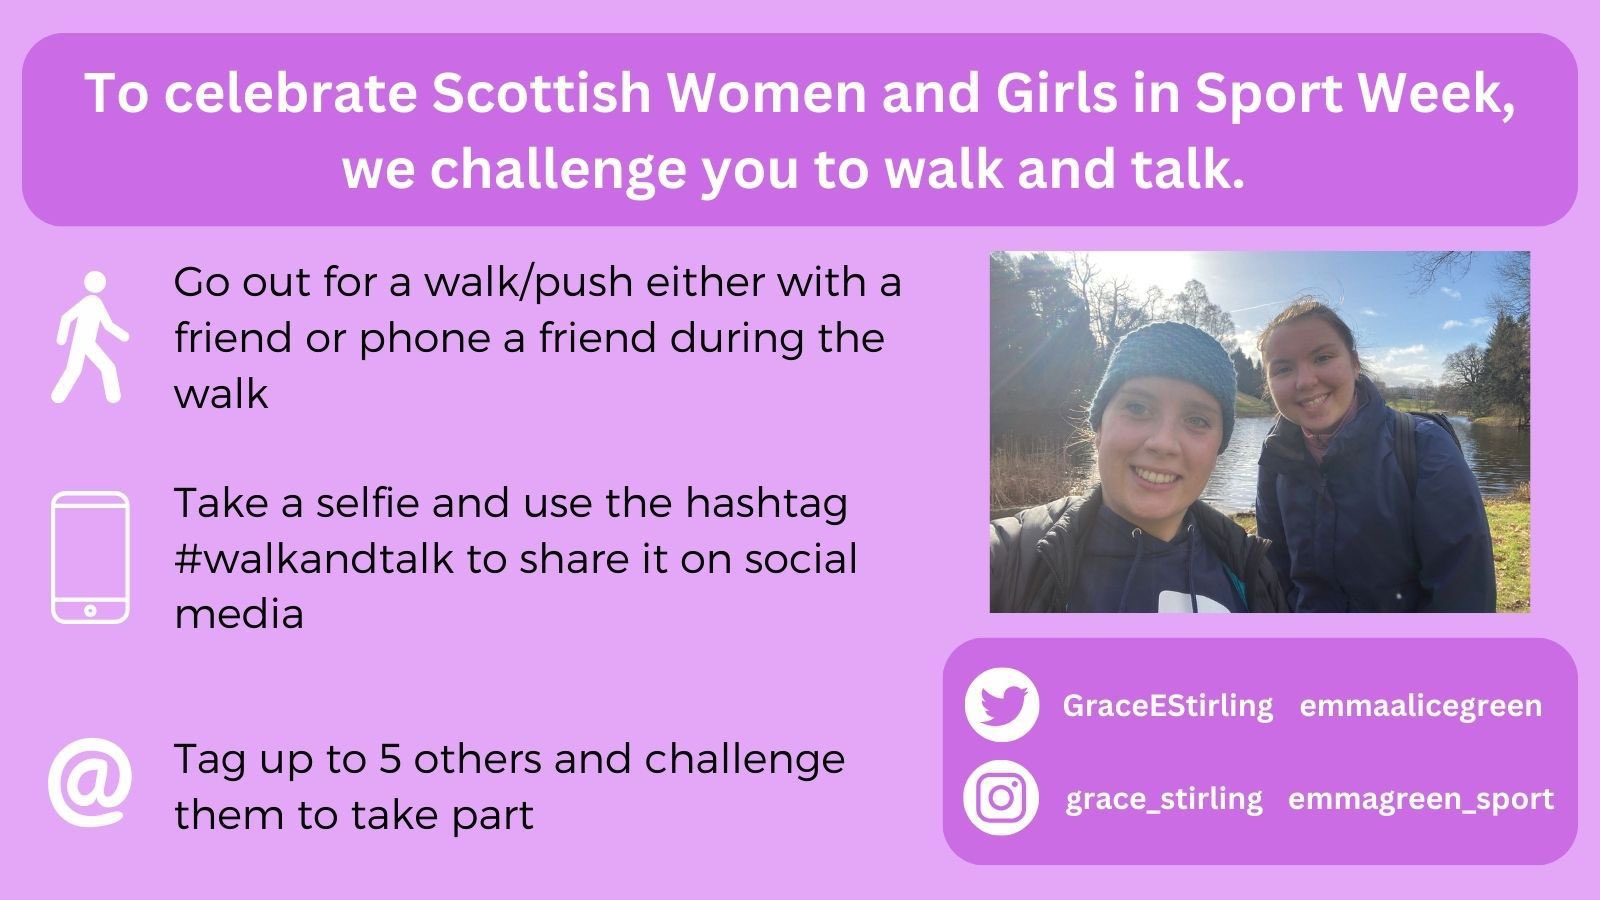 Scottish Women and Girls in Sport Week - get involved! - Scottish